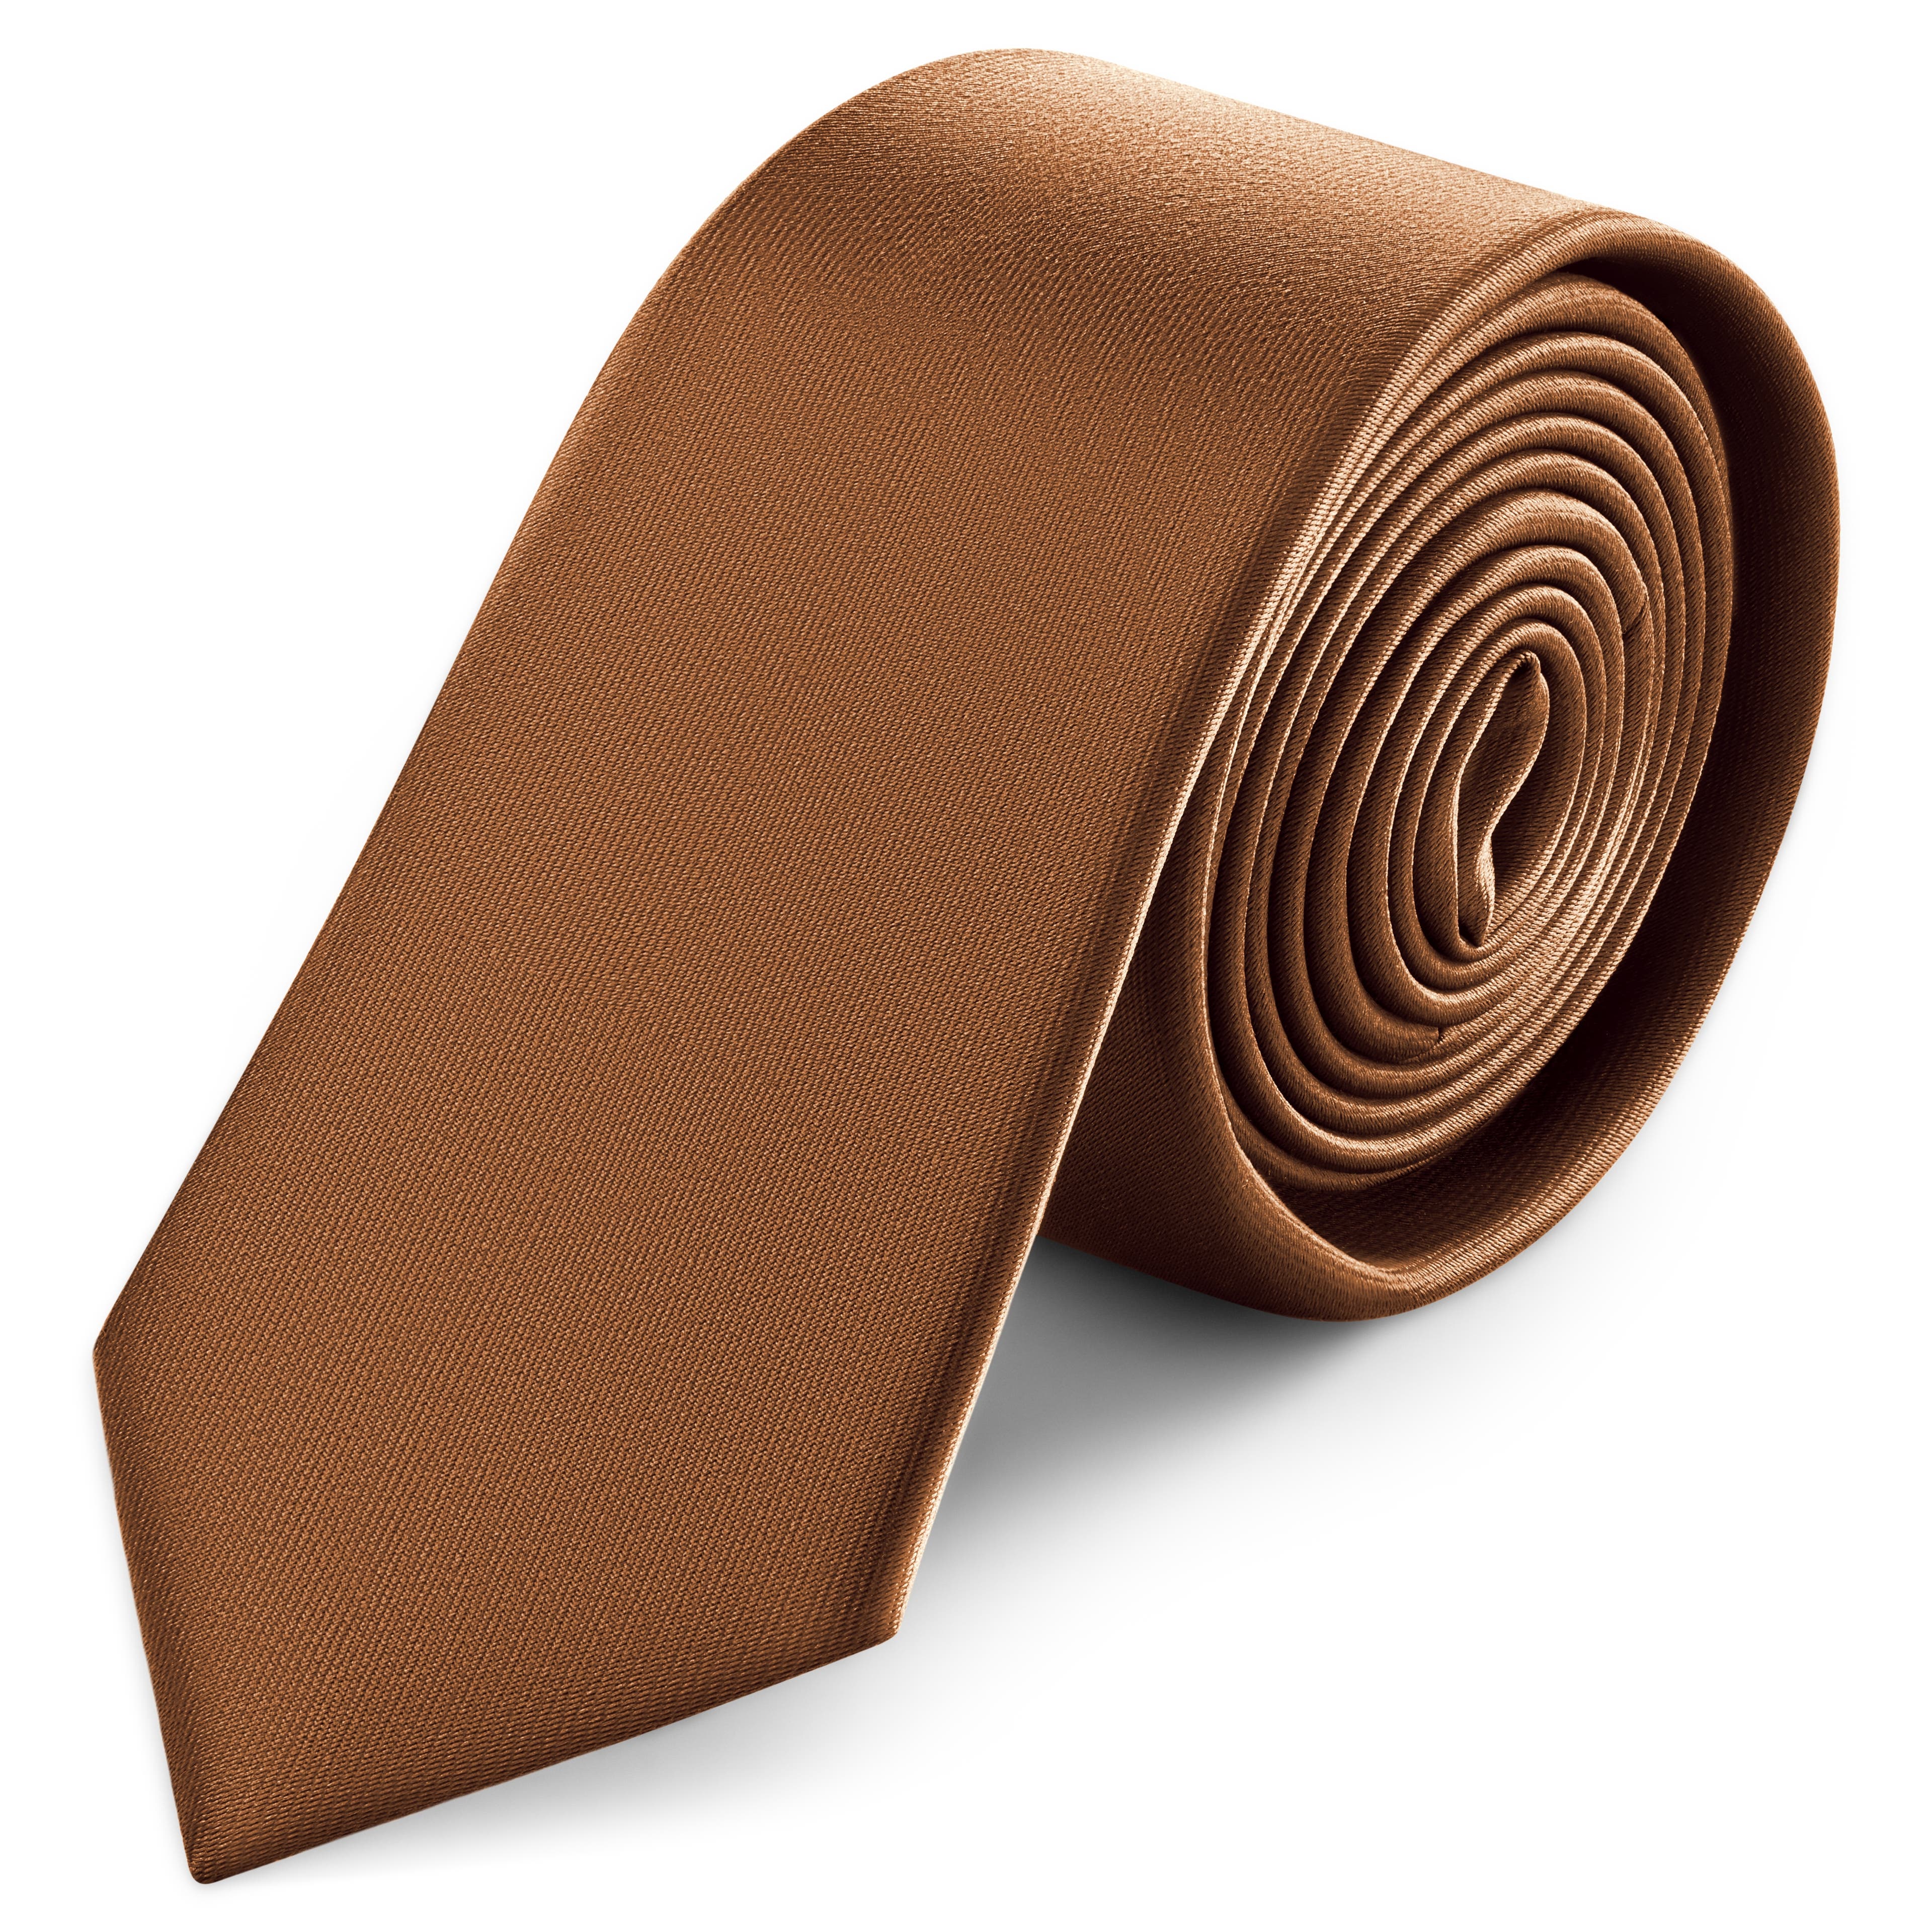 6 cm schmale Krawatte aus rostfarbenem Satin